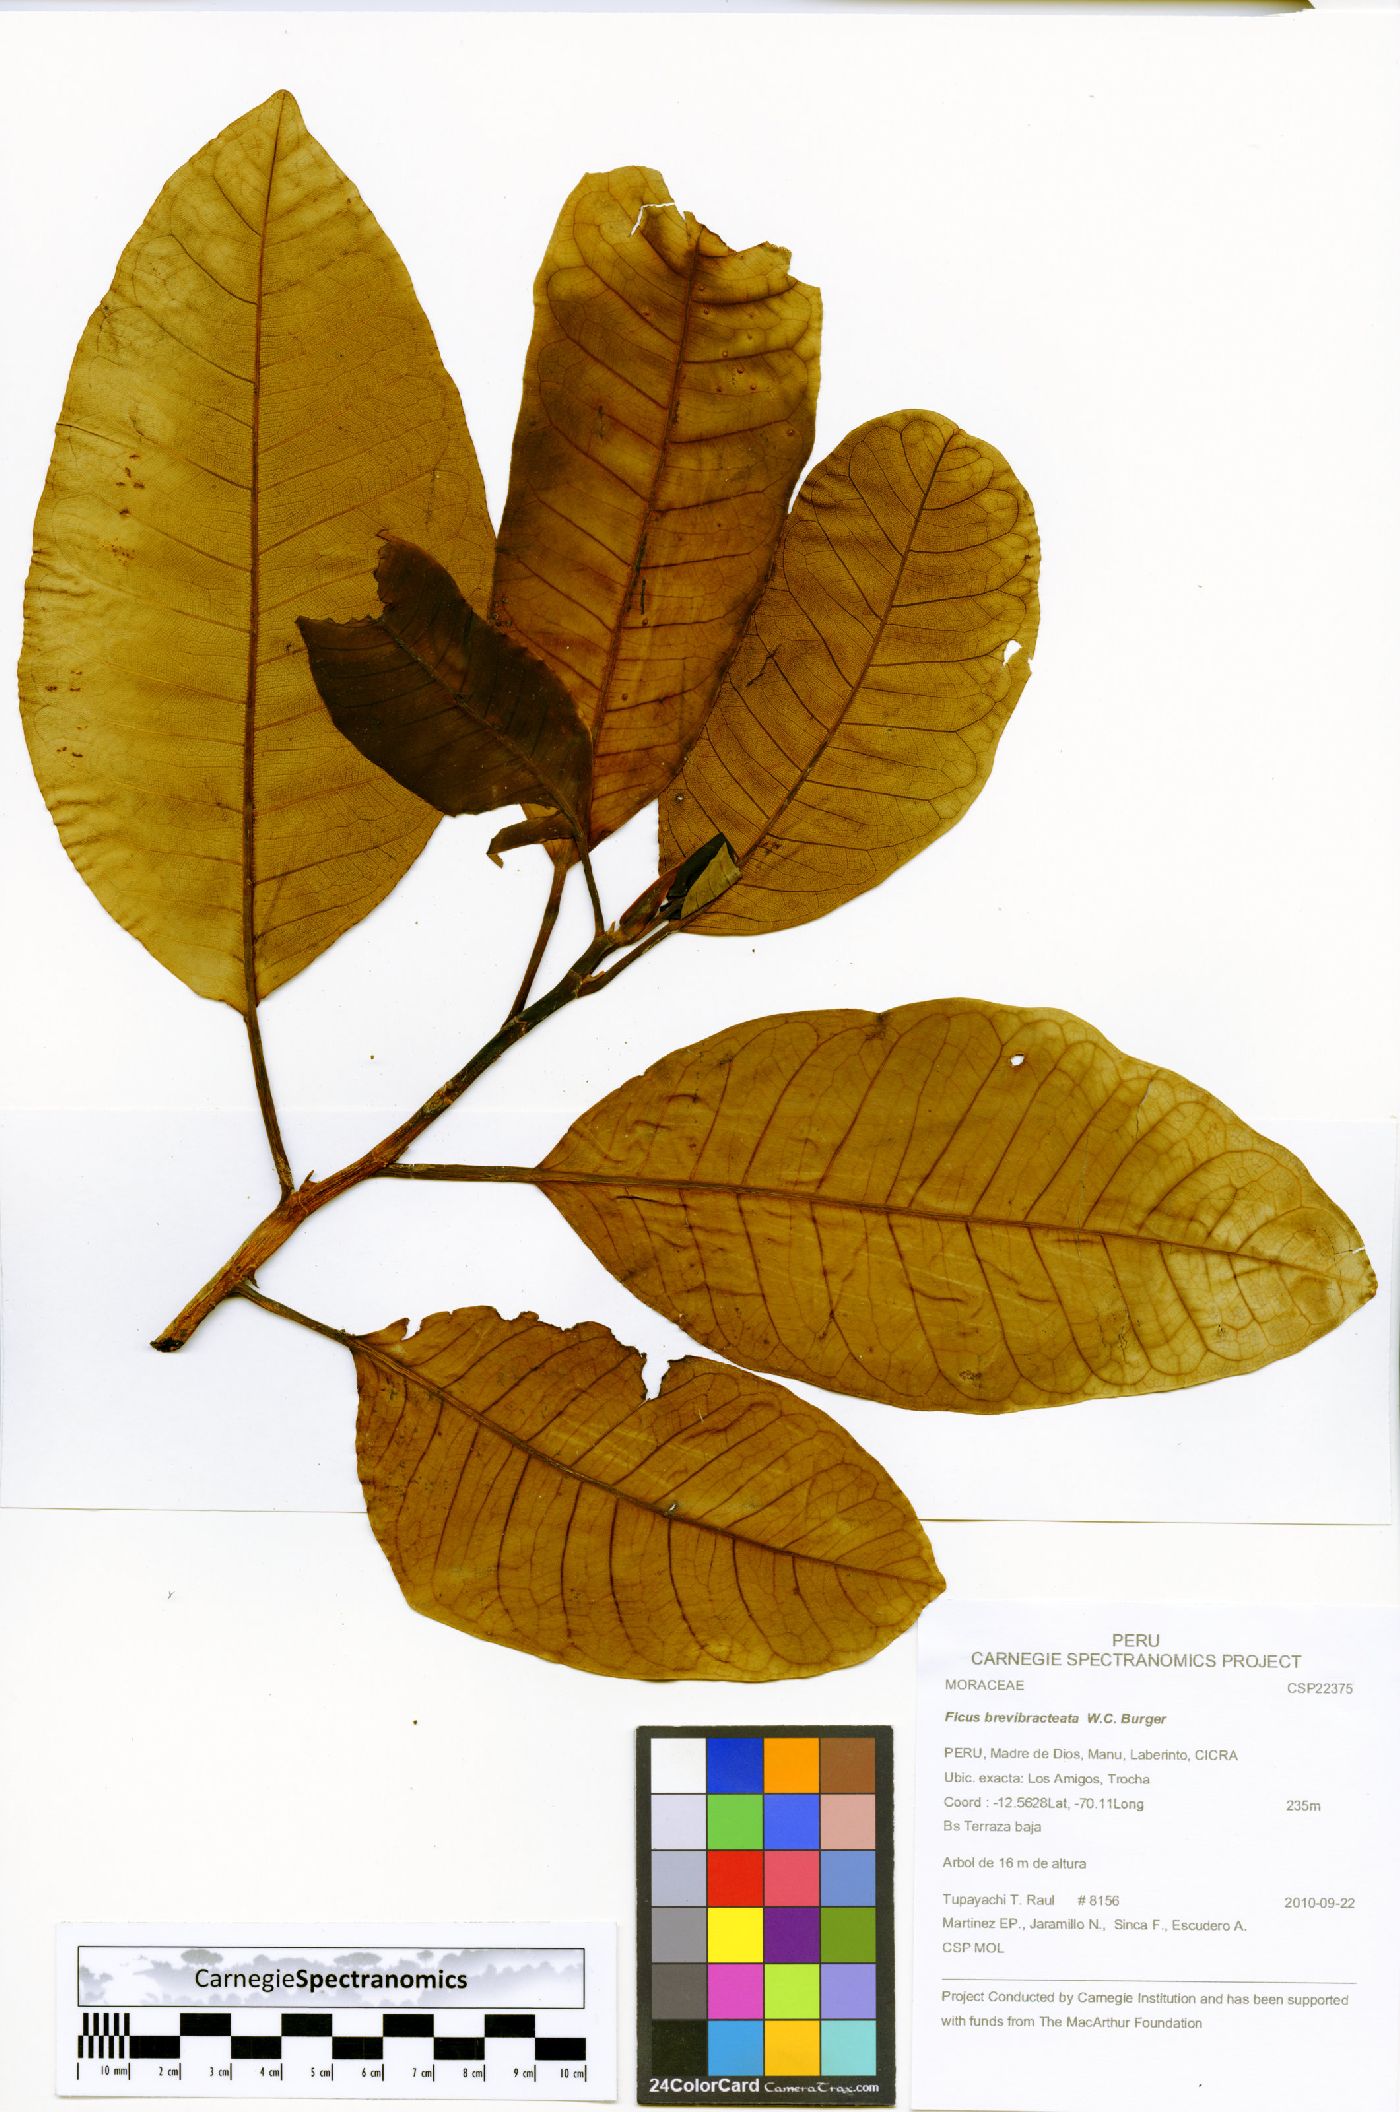 Ficus brevibracteata image